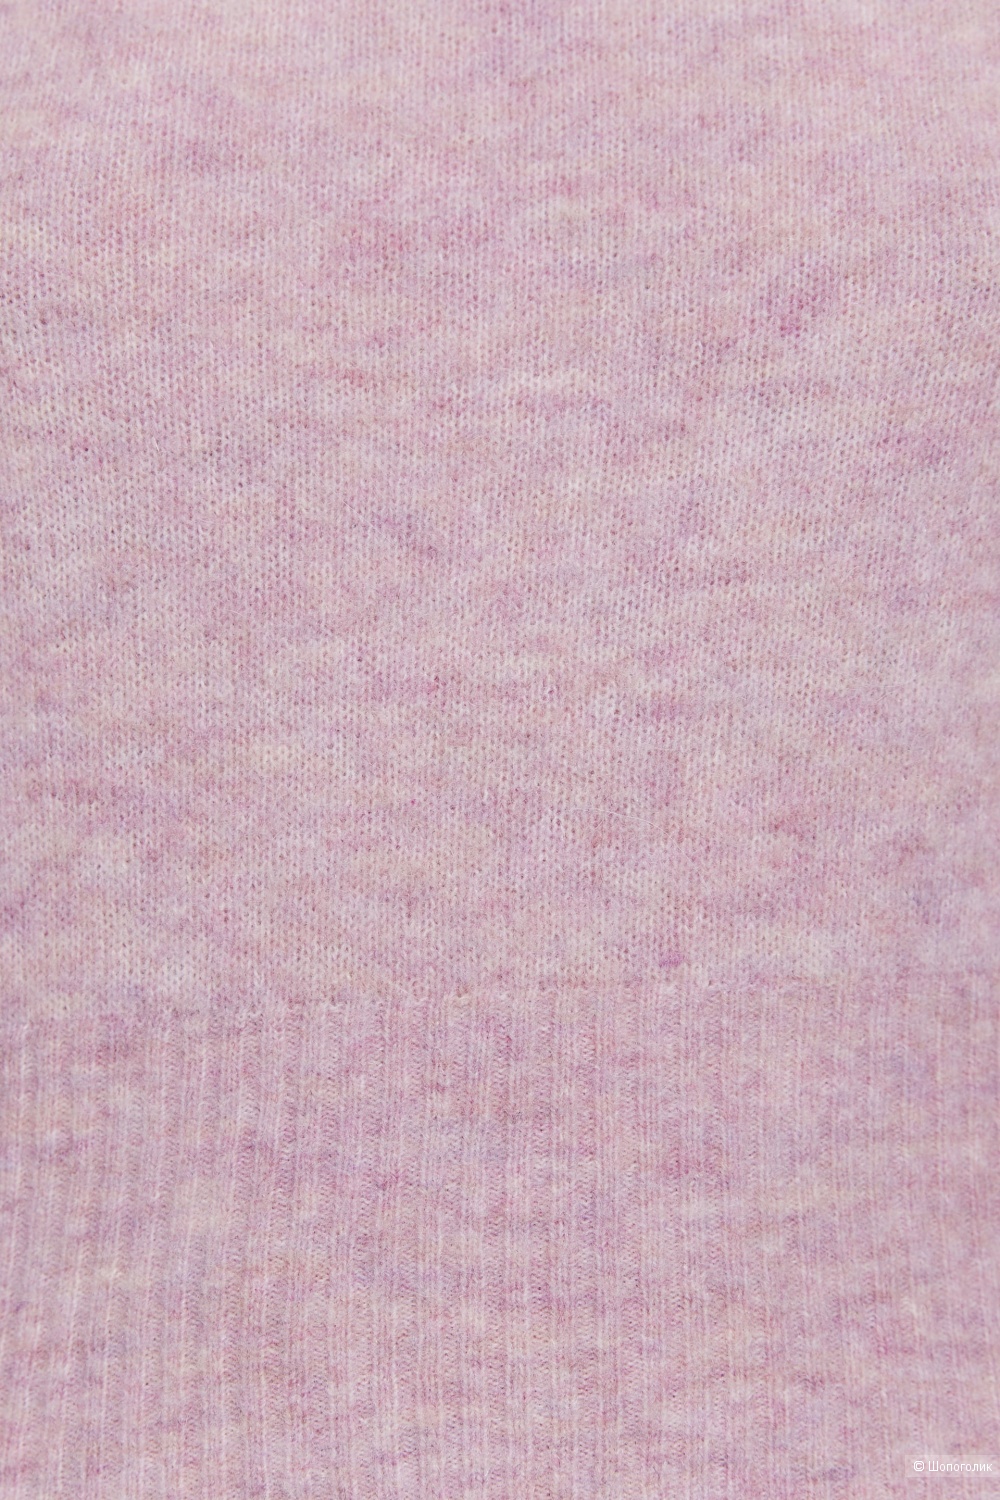 Шерстяной свитер Zara, размер S